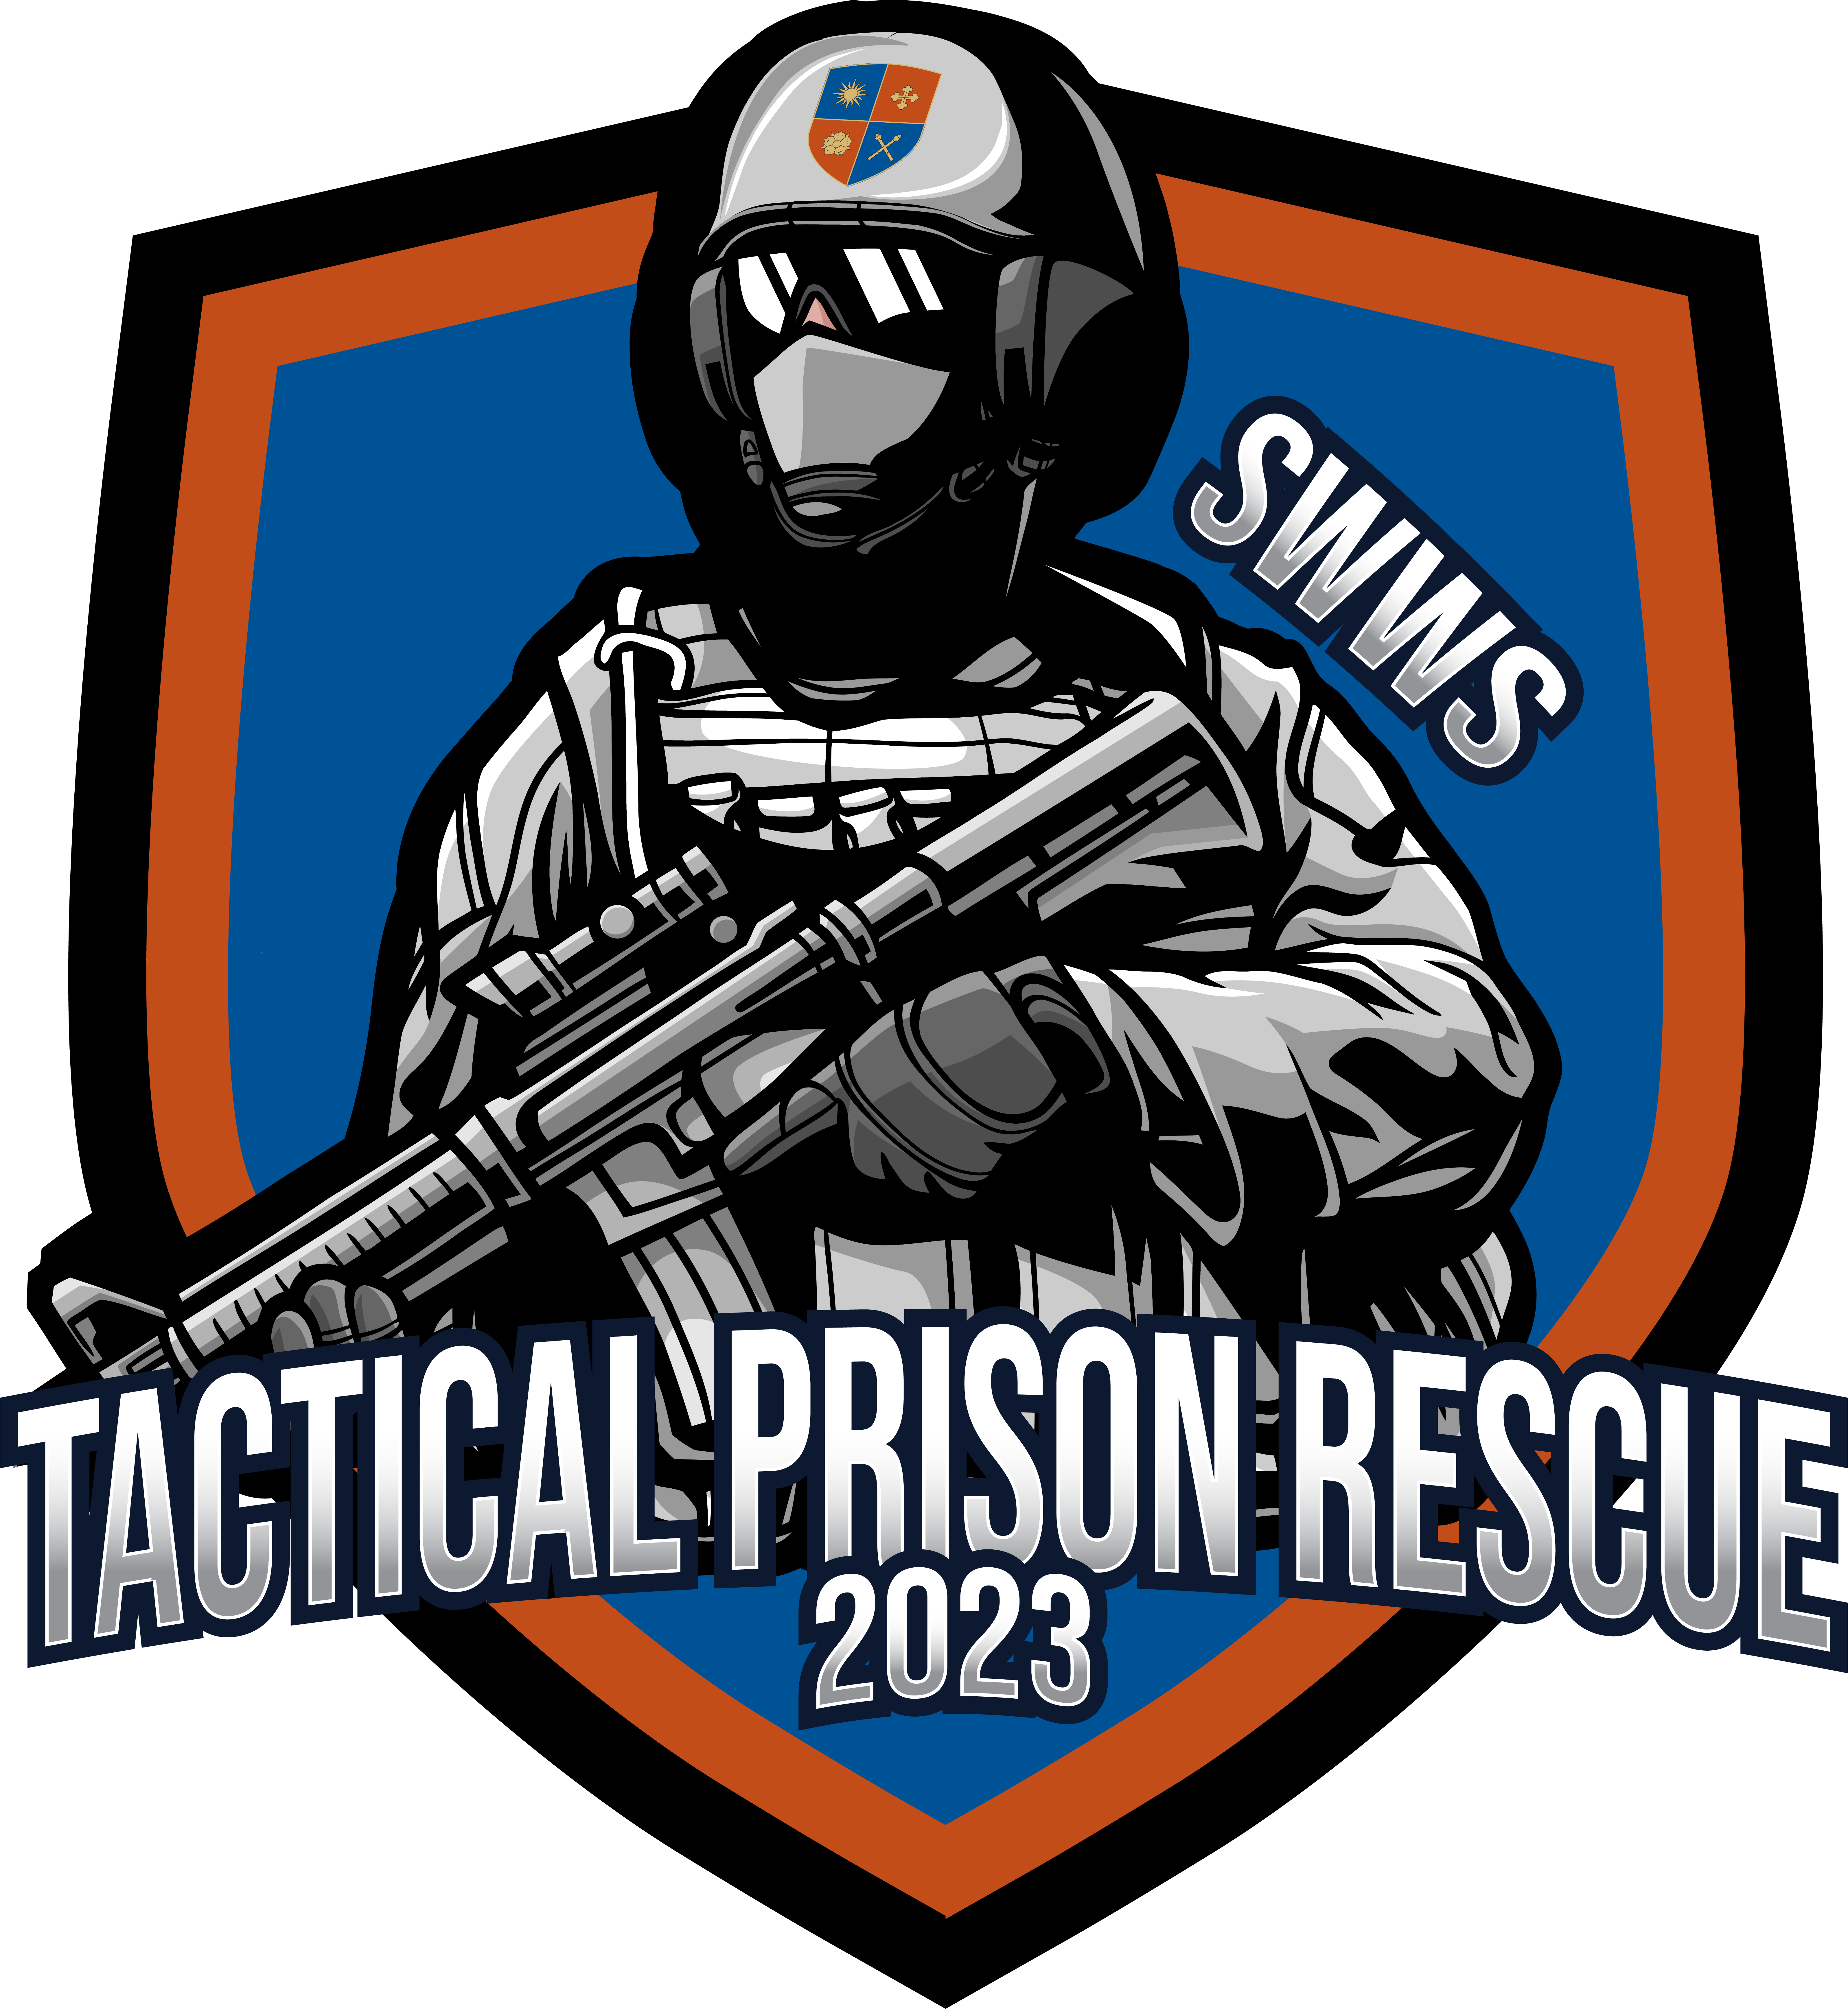 Tactical Prison Rescue 2023